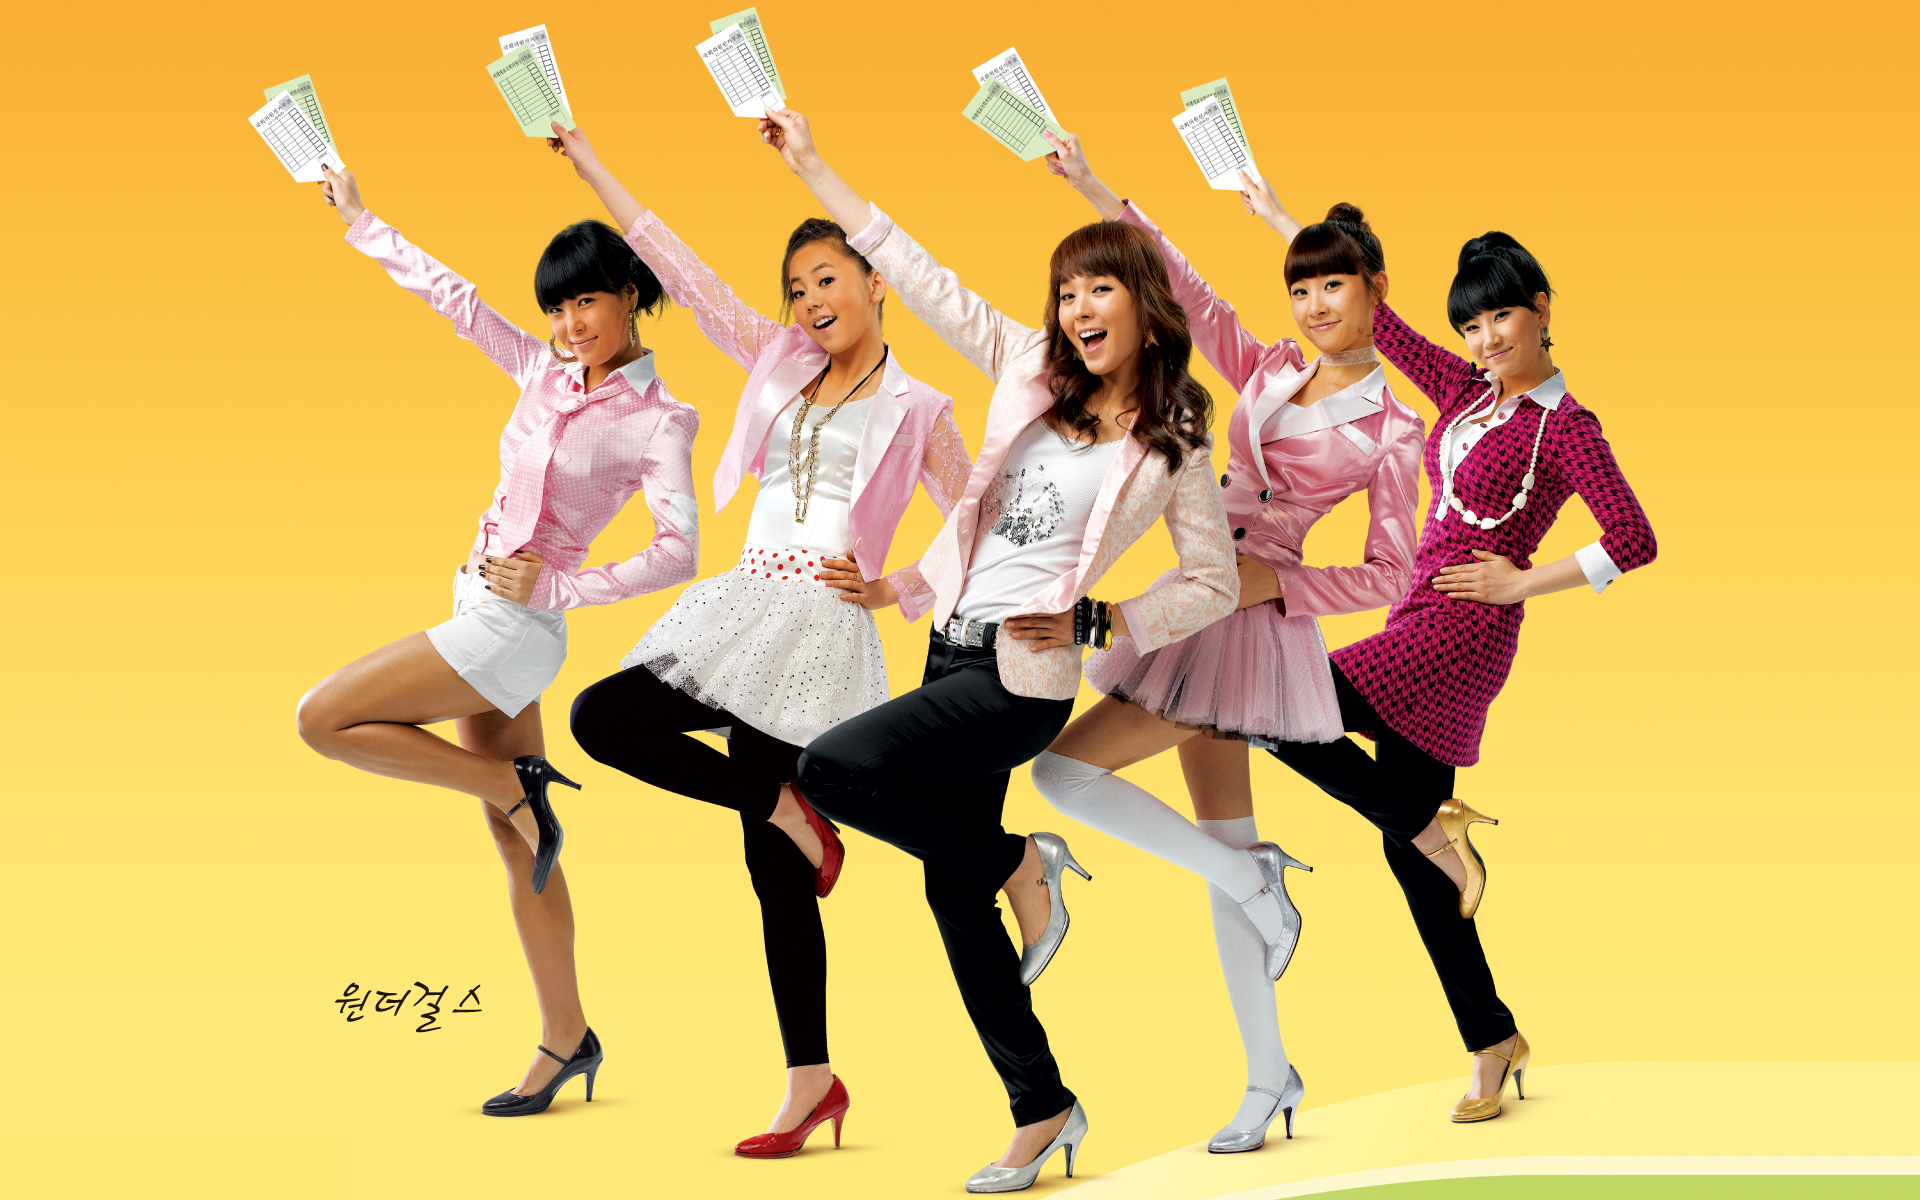 Wonder Girls Image HD Wallpaper And Background